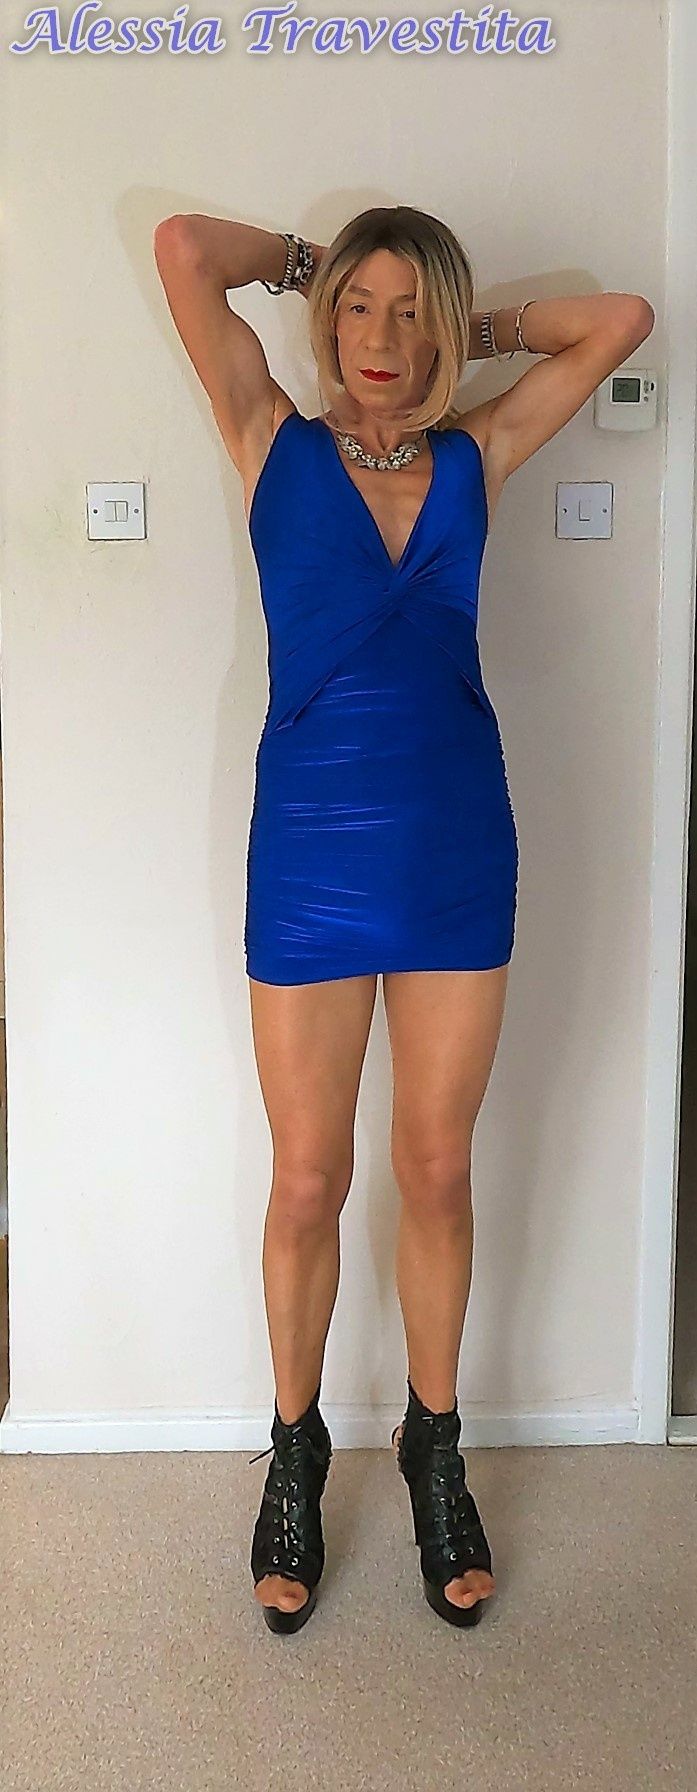 77 Alessia Travestita in Blue Italian Designer Dress #33